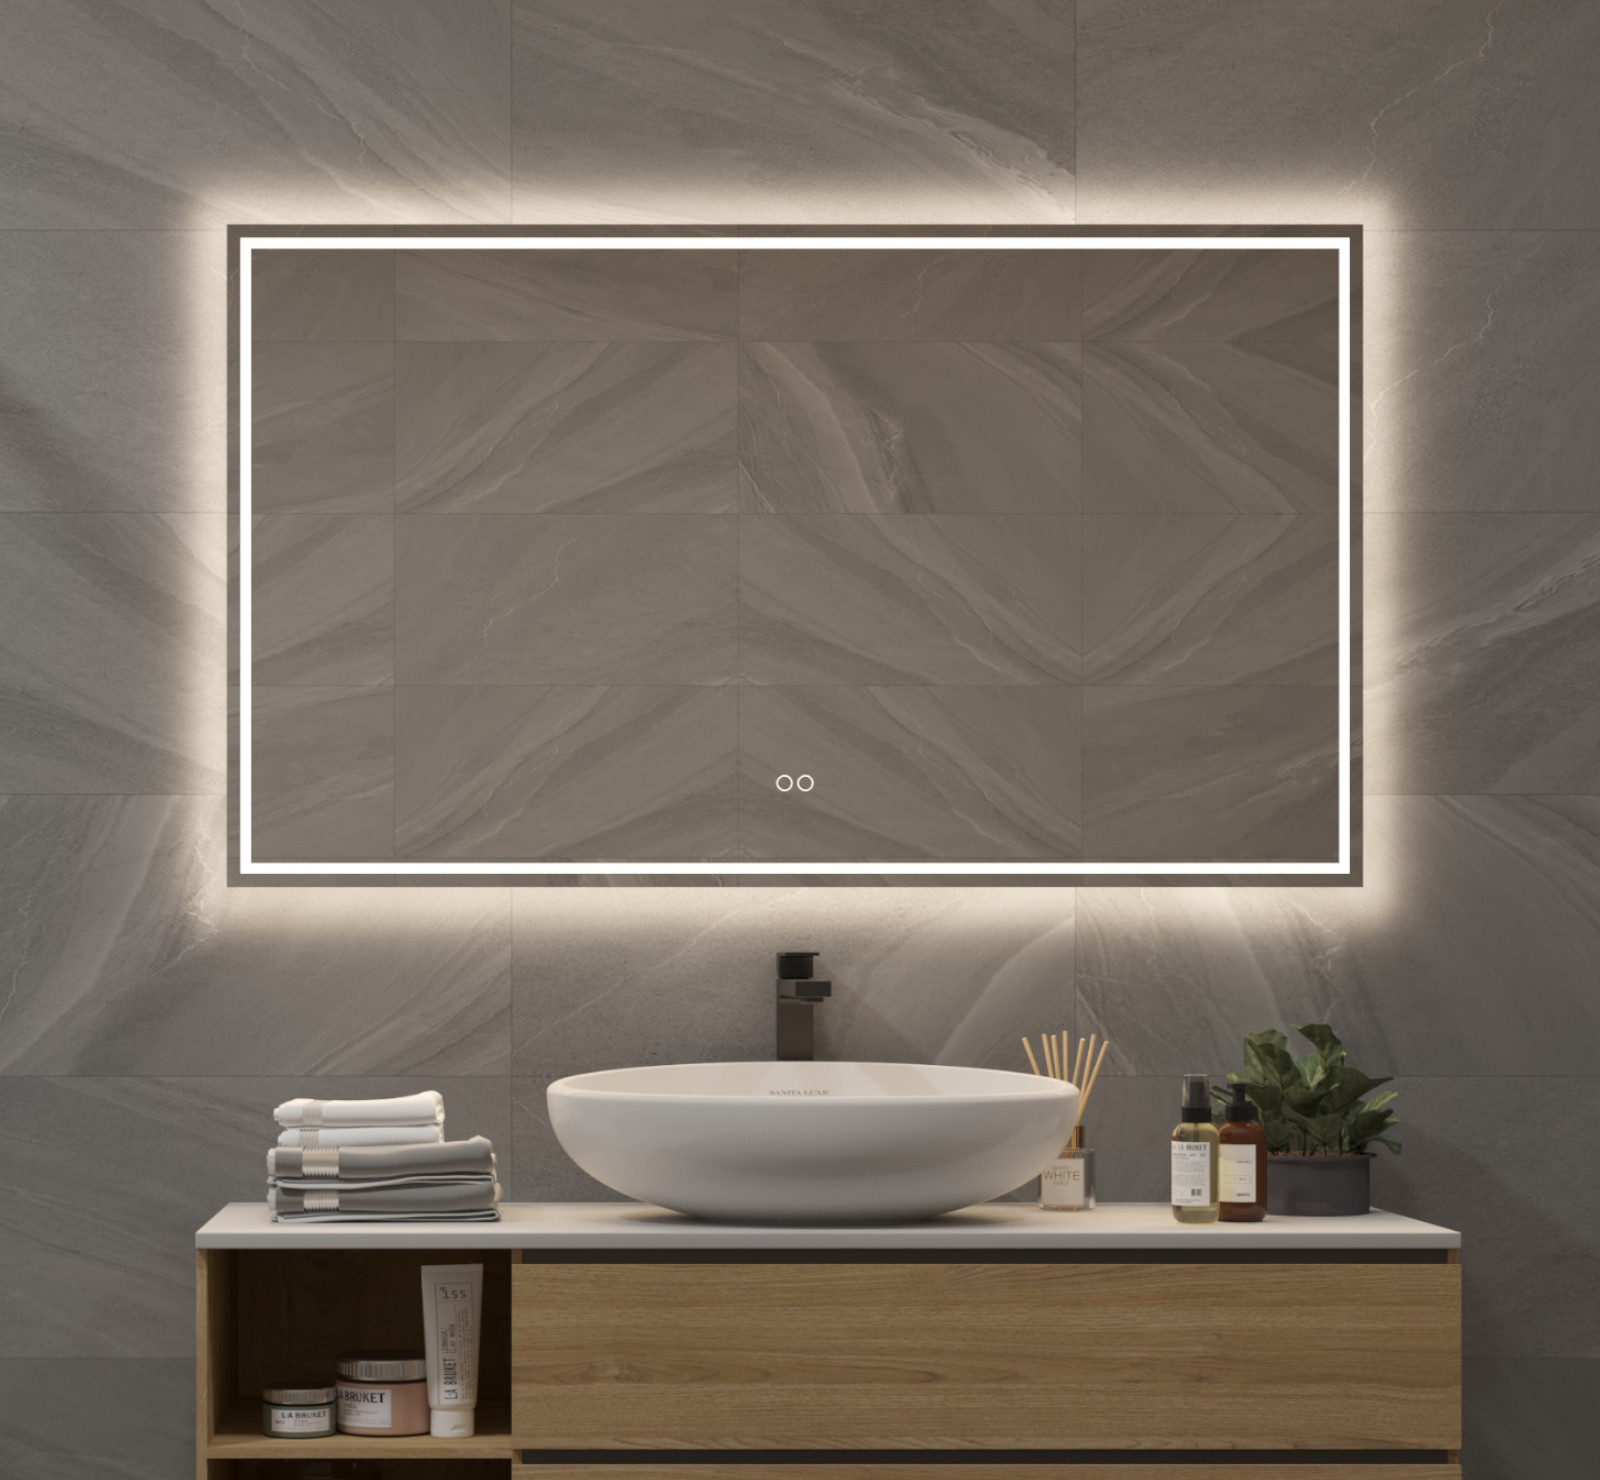 Badkamerspiegel met LED verwarming, instelbare lichtkleur en dimfunctie 120x70 cm - Designspiegels